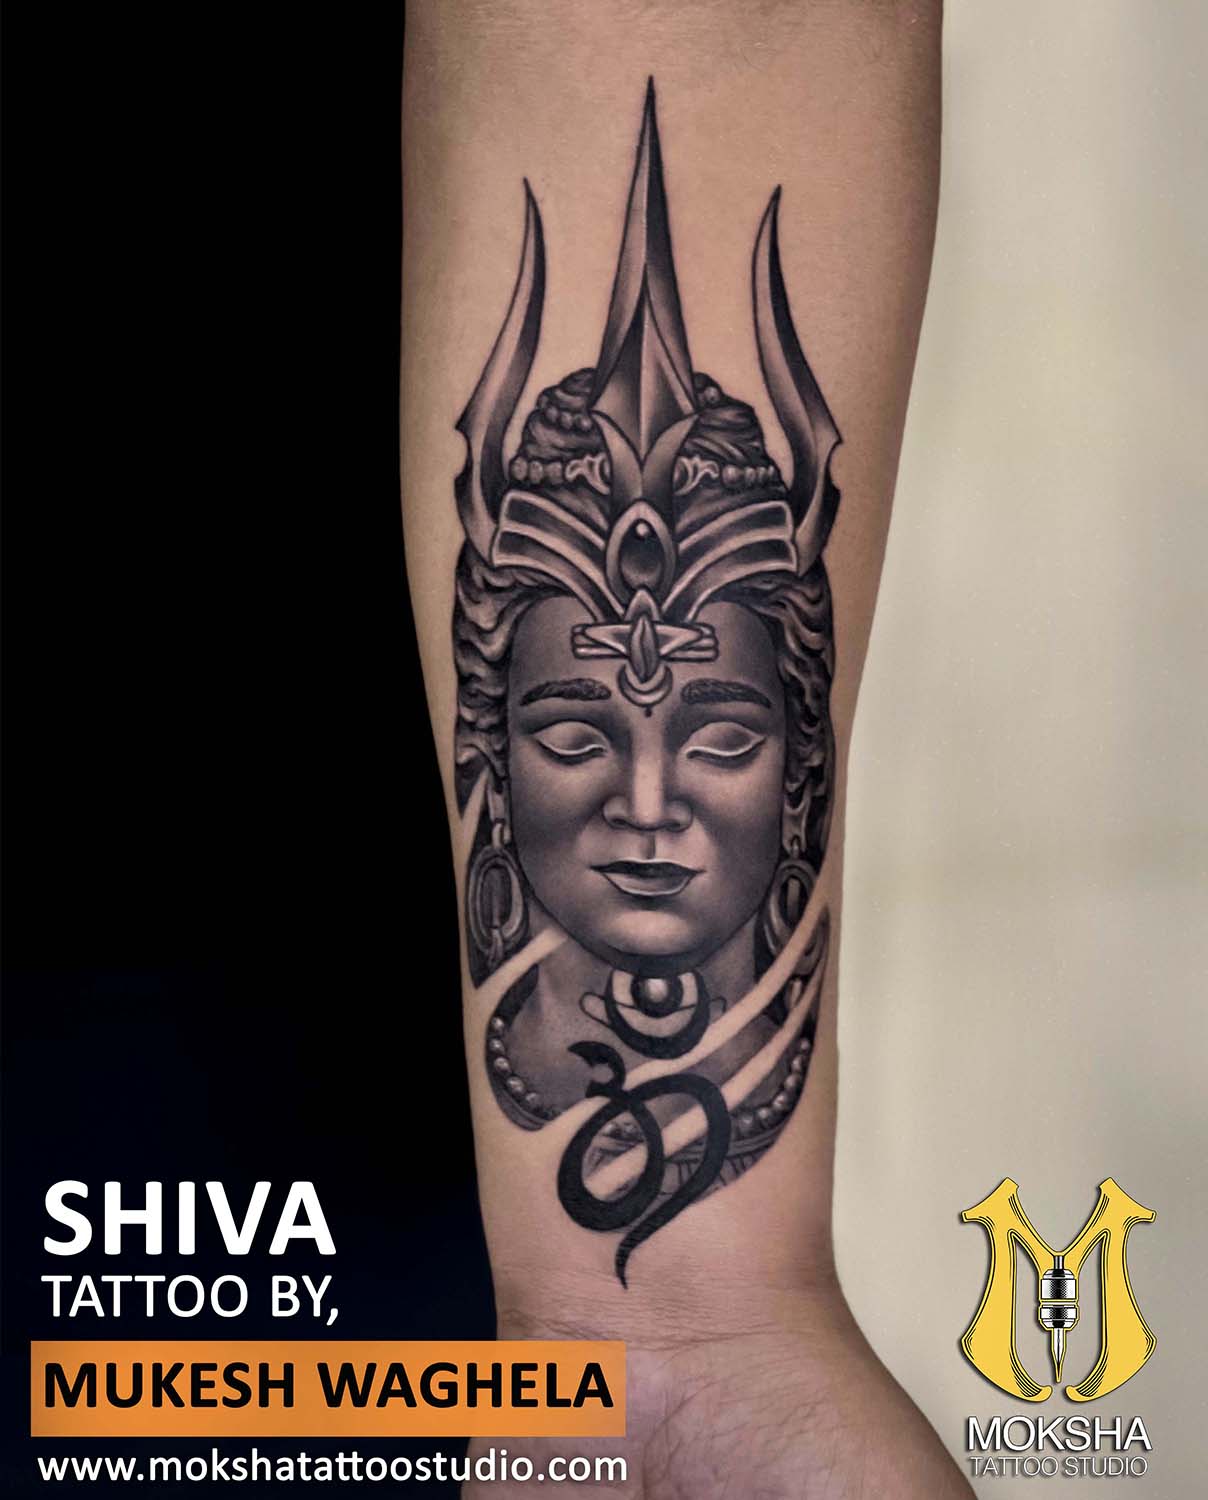 Tattoo uploaded by Samurai Tattoo mehsana • Mahadev tattoo |Shiva tattoo  |Bholenath tattoo |Mahadev tattoo design • Tattoodo